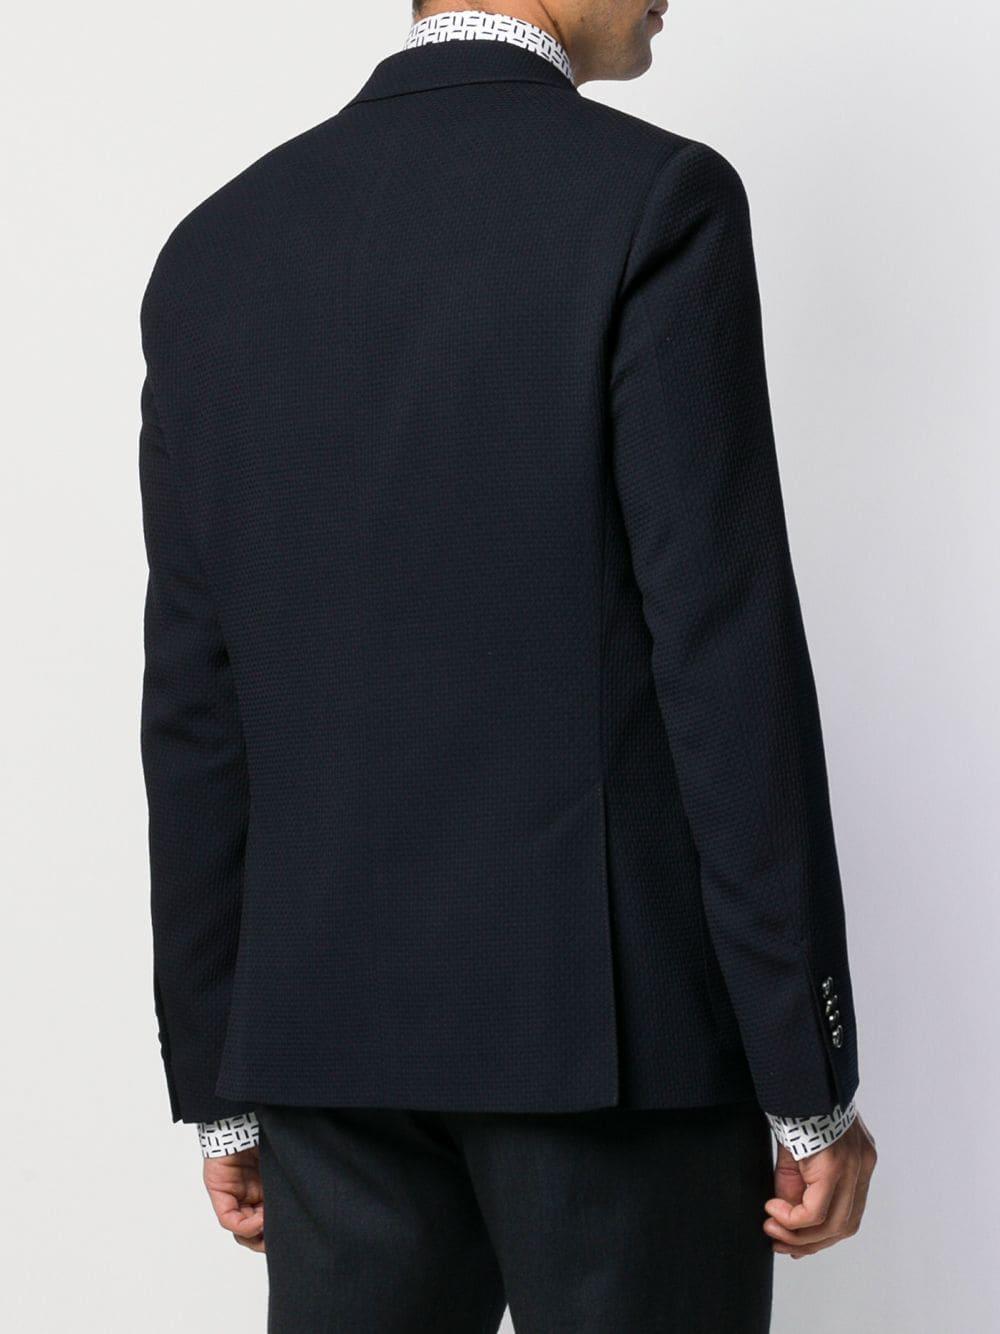 Karl Lagerfeld Wool Textured Suit Jacket in Blue for Men - Lyst